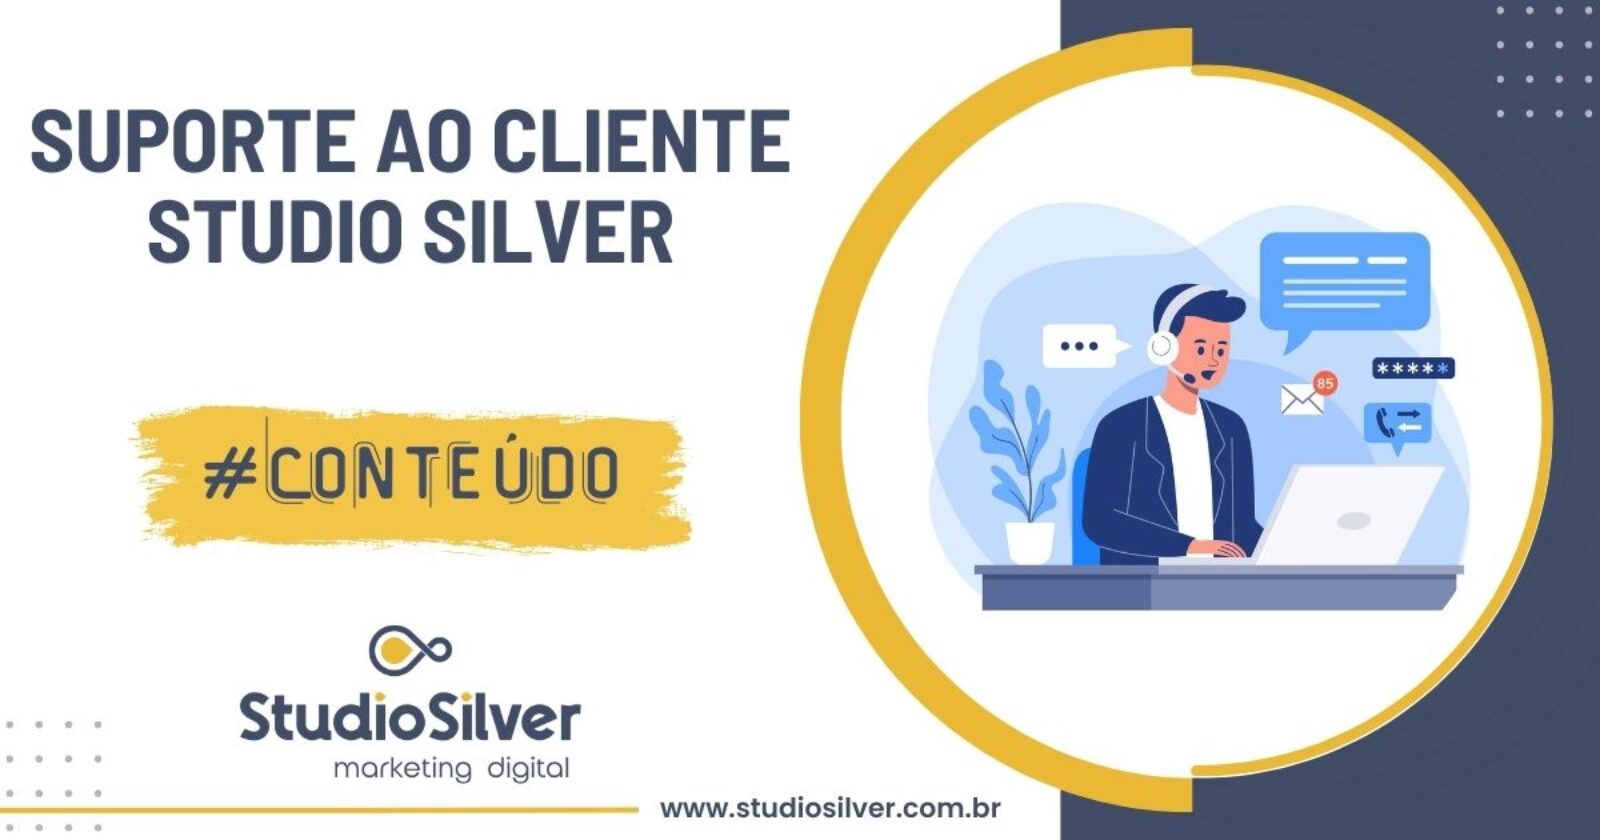 Procedimentos de Suporte ao Cliente Studio Silver